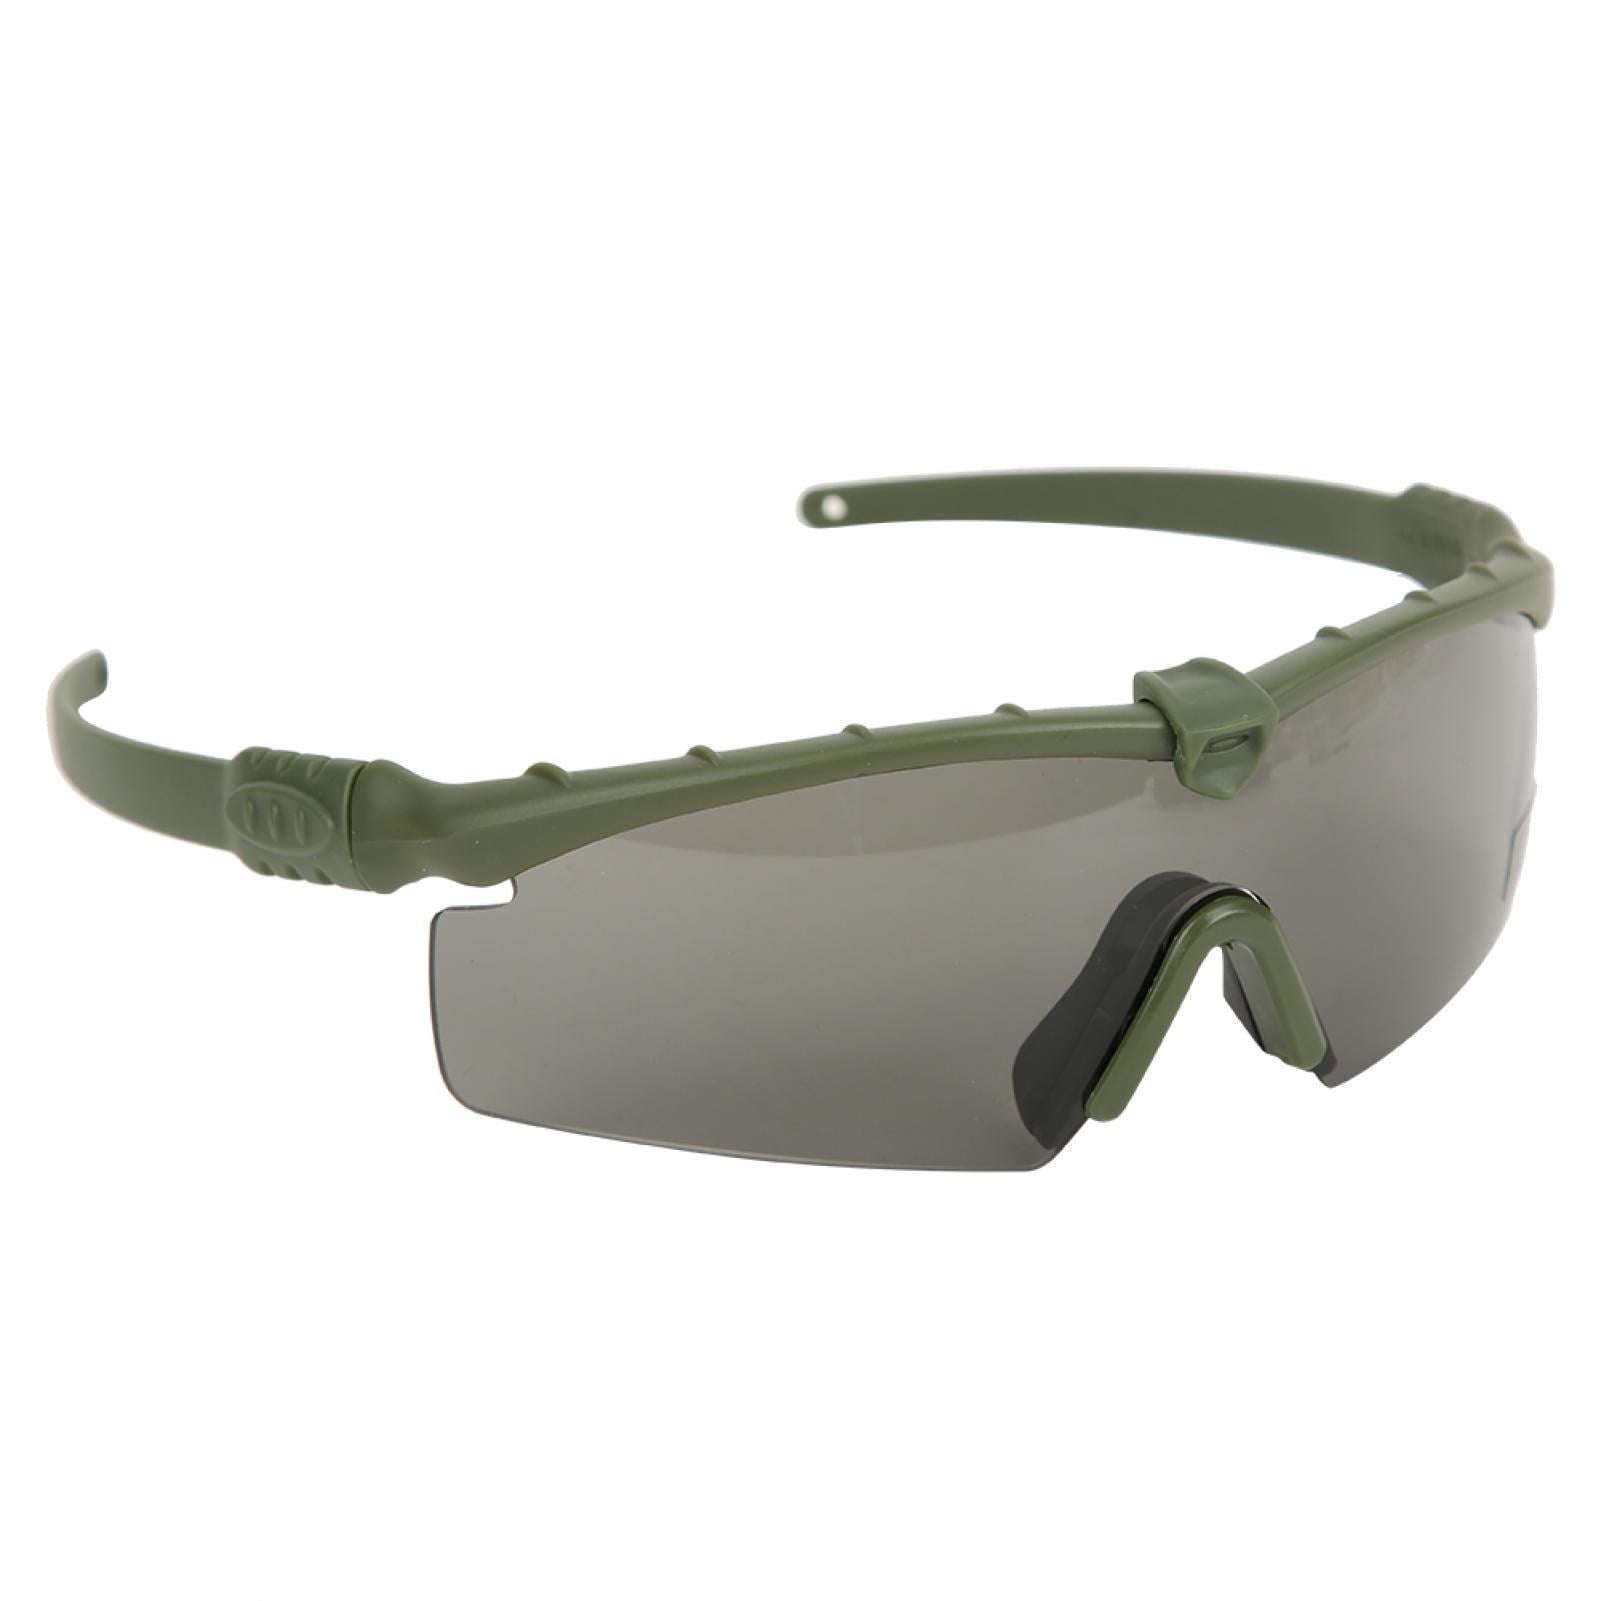 CycloTactical Sunglasses: Dust Proof, Wind Resistant & Bulletproof